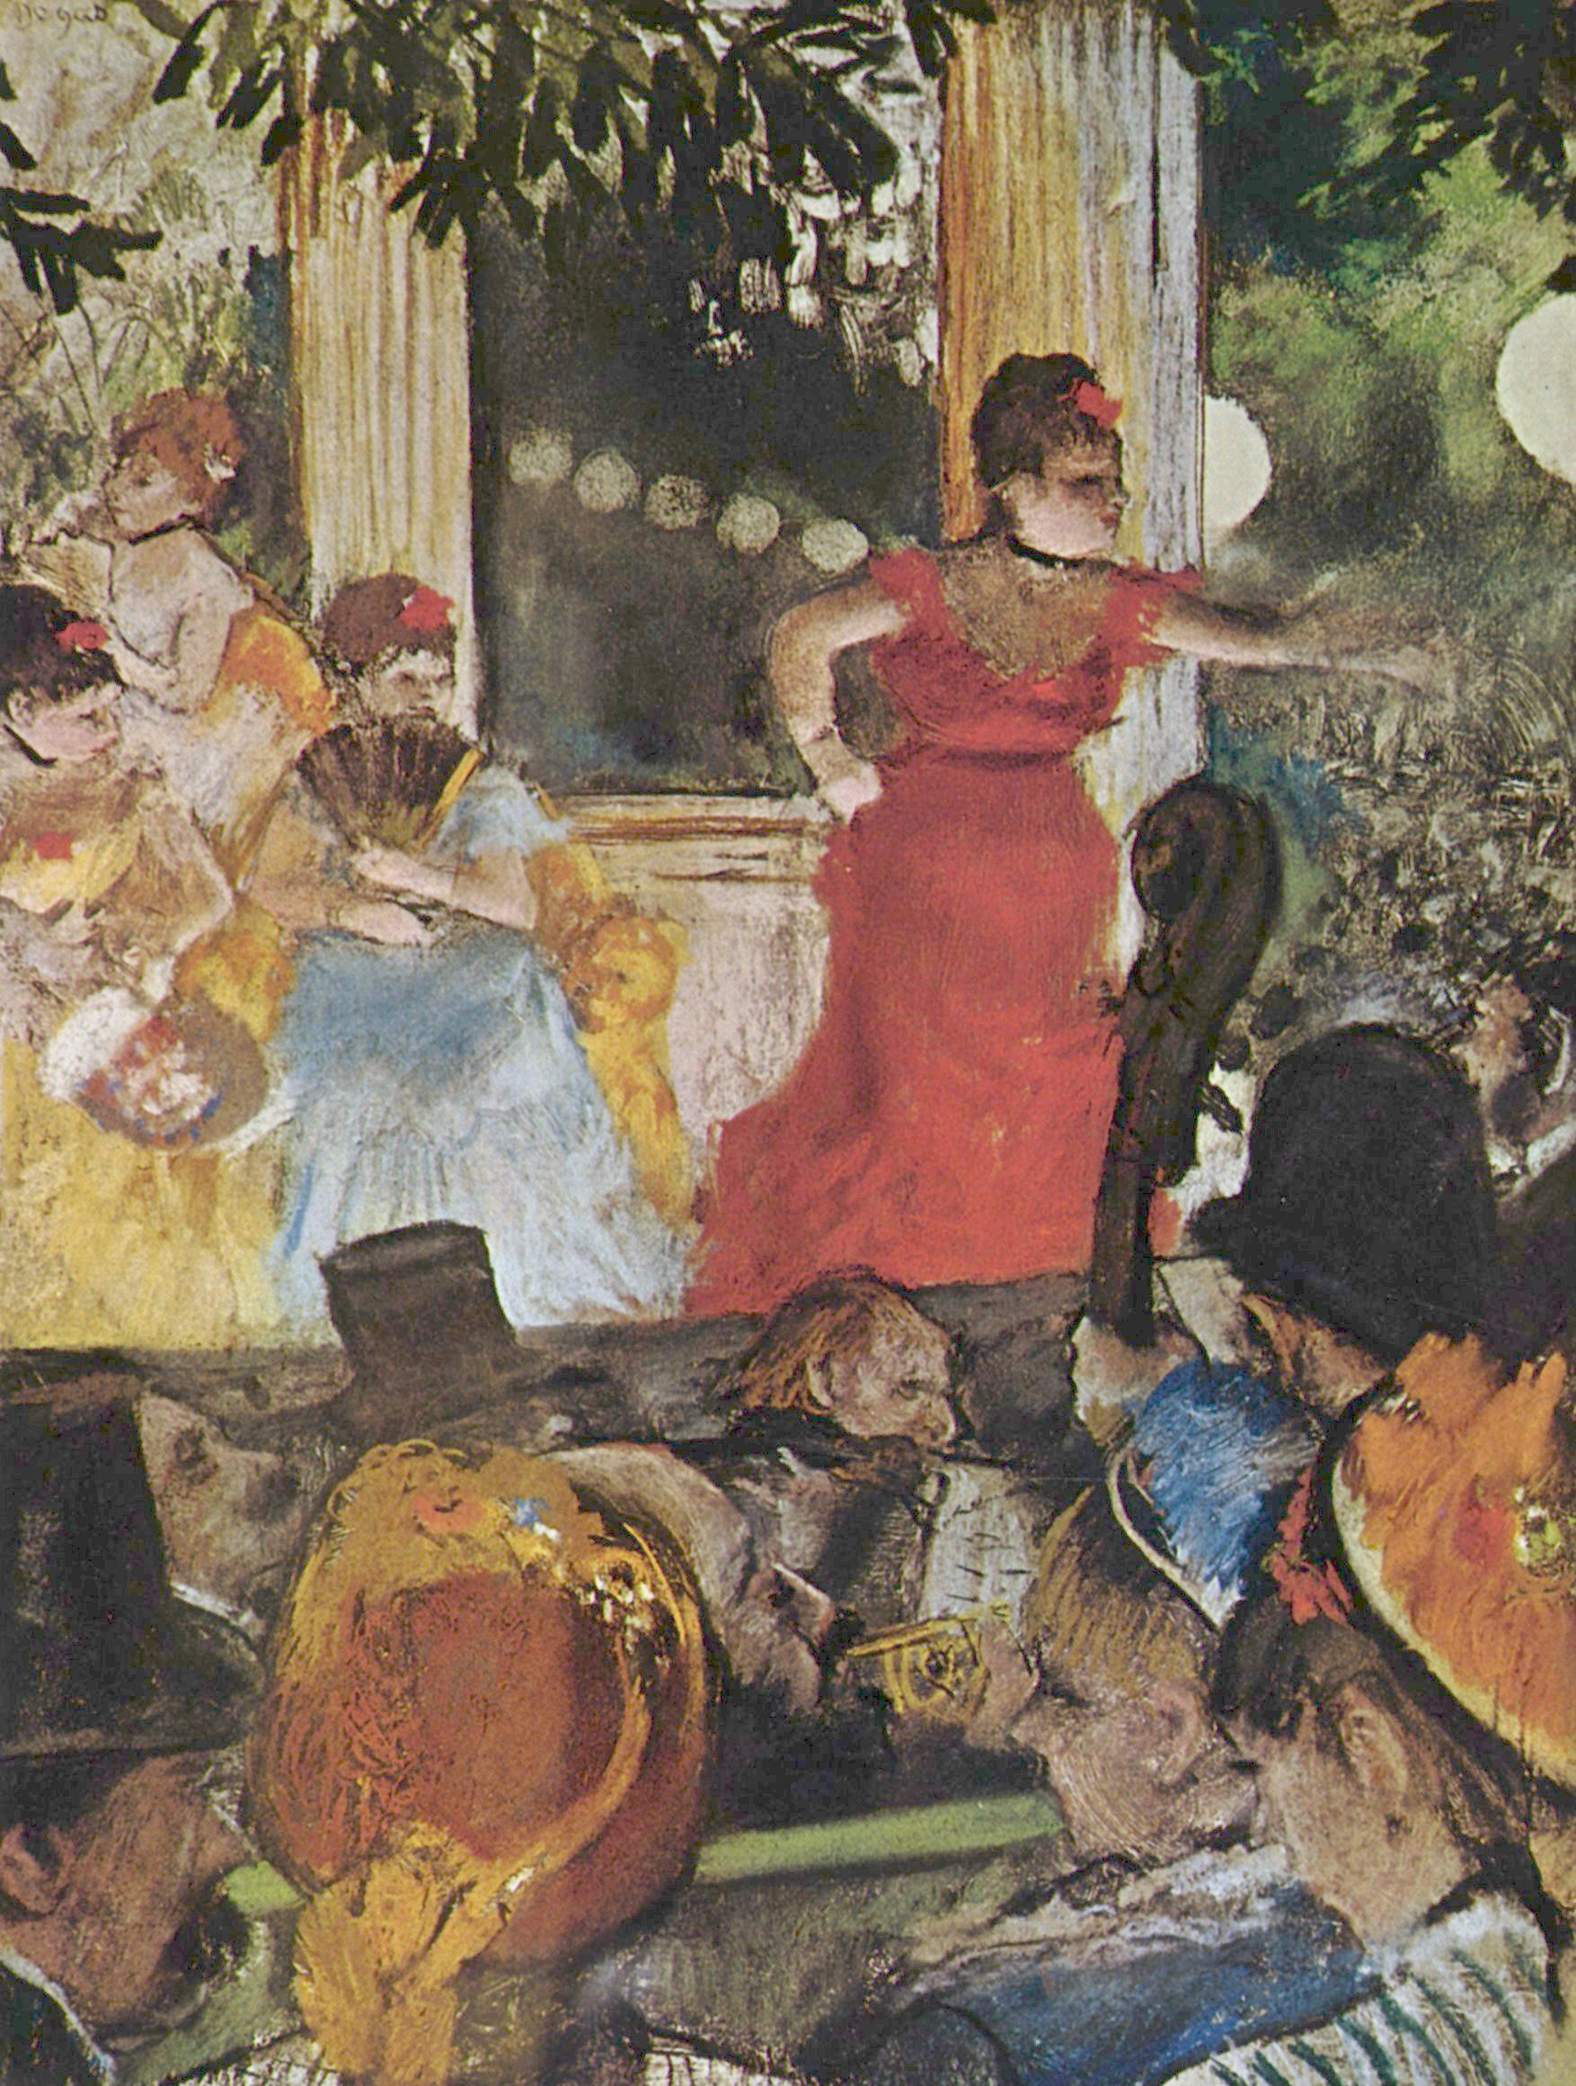 Caffè - Concerto agli Ambassadeurs by Edgar Degas - 1877 - 37 x 26 cm 